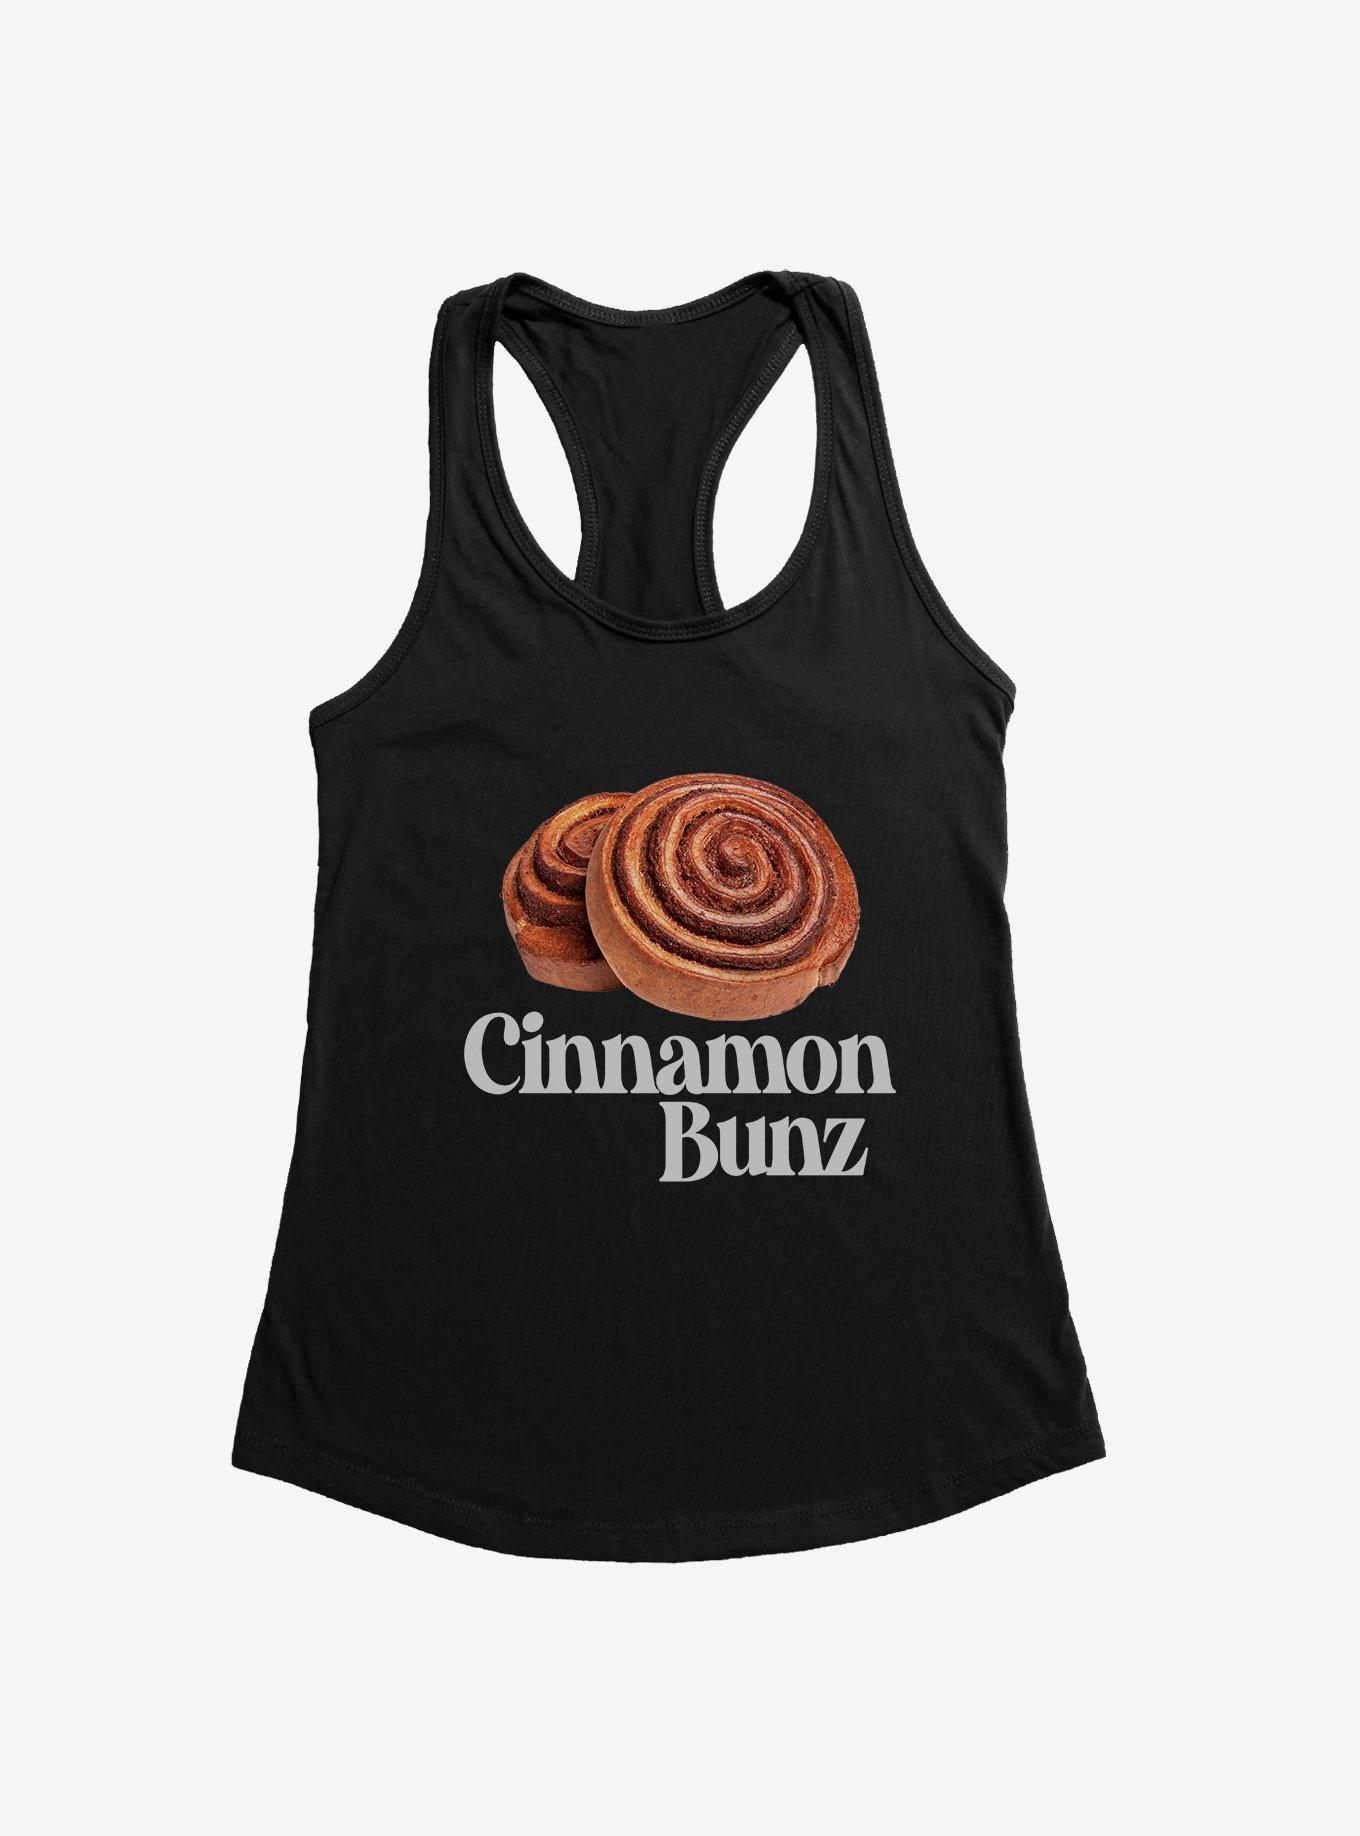 Hot Topic Cinnamon Bunz Girls Tank